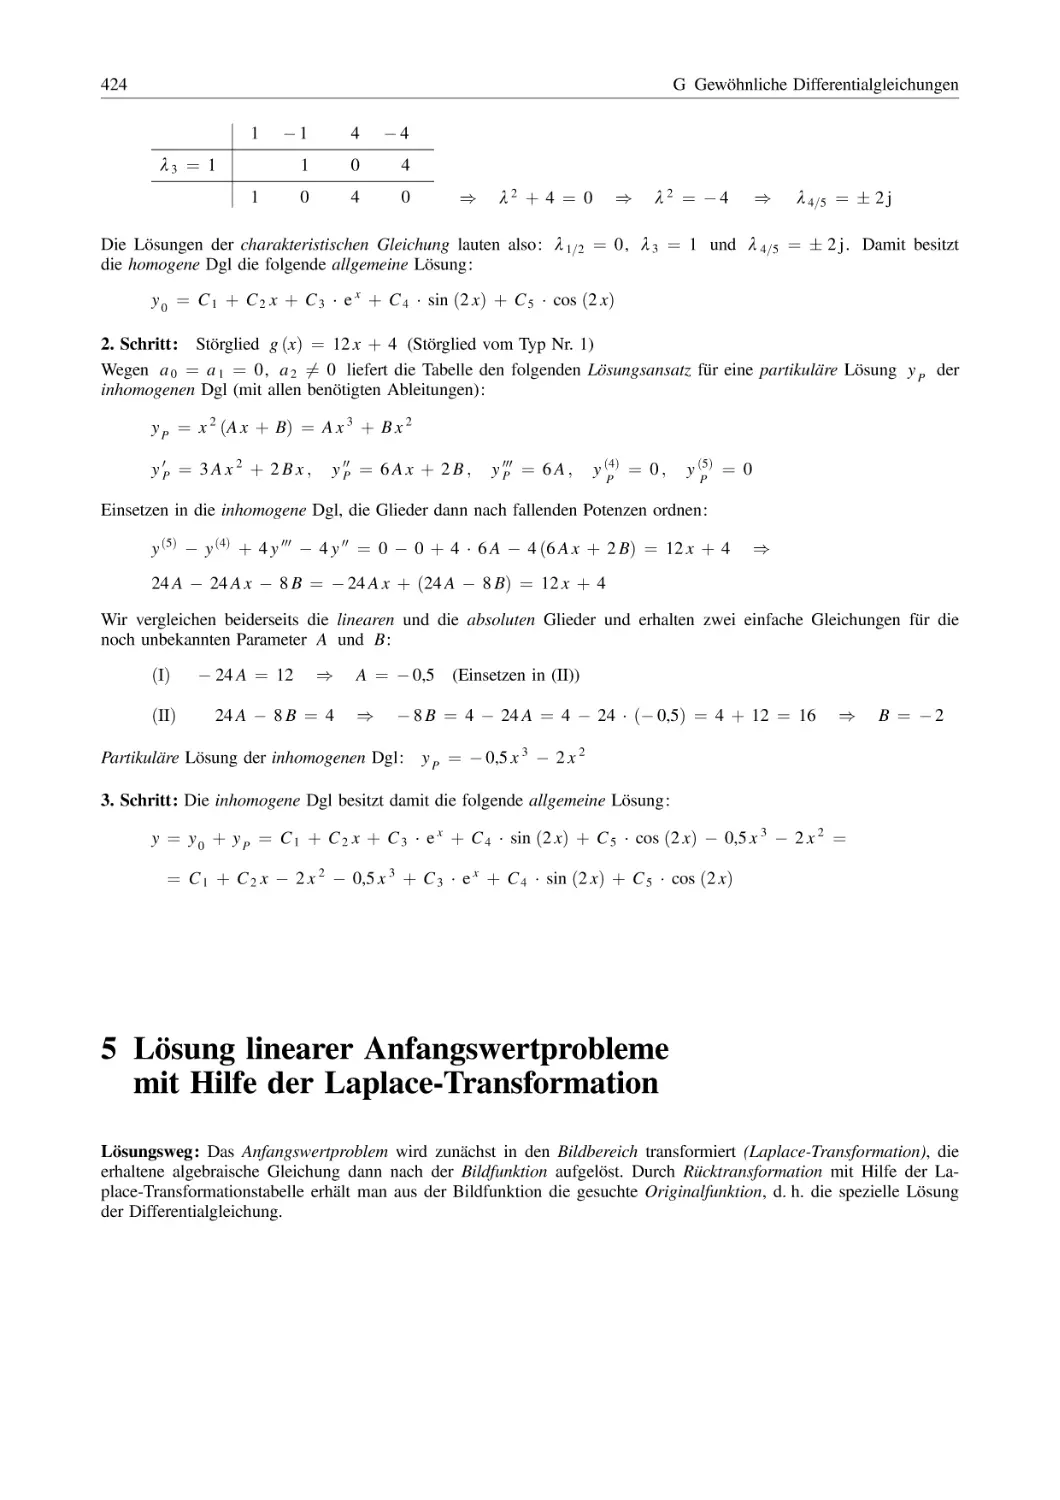 5 Lösung linearer Anfangswertprobleme mit Hilfe der Laplace-Transformation